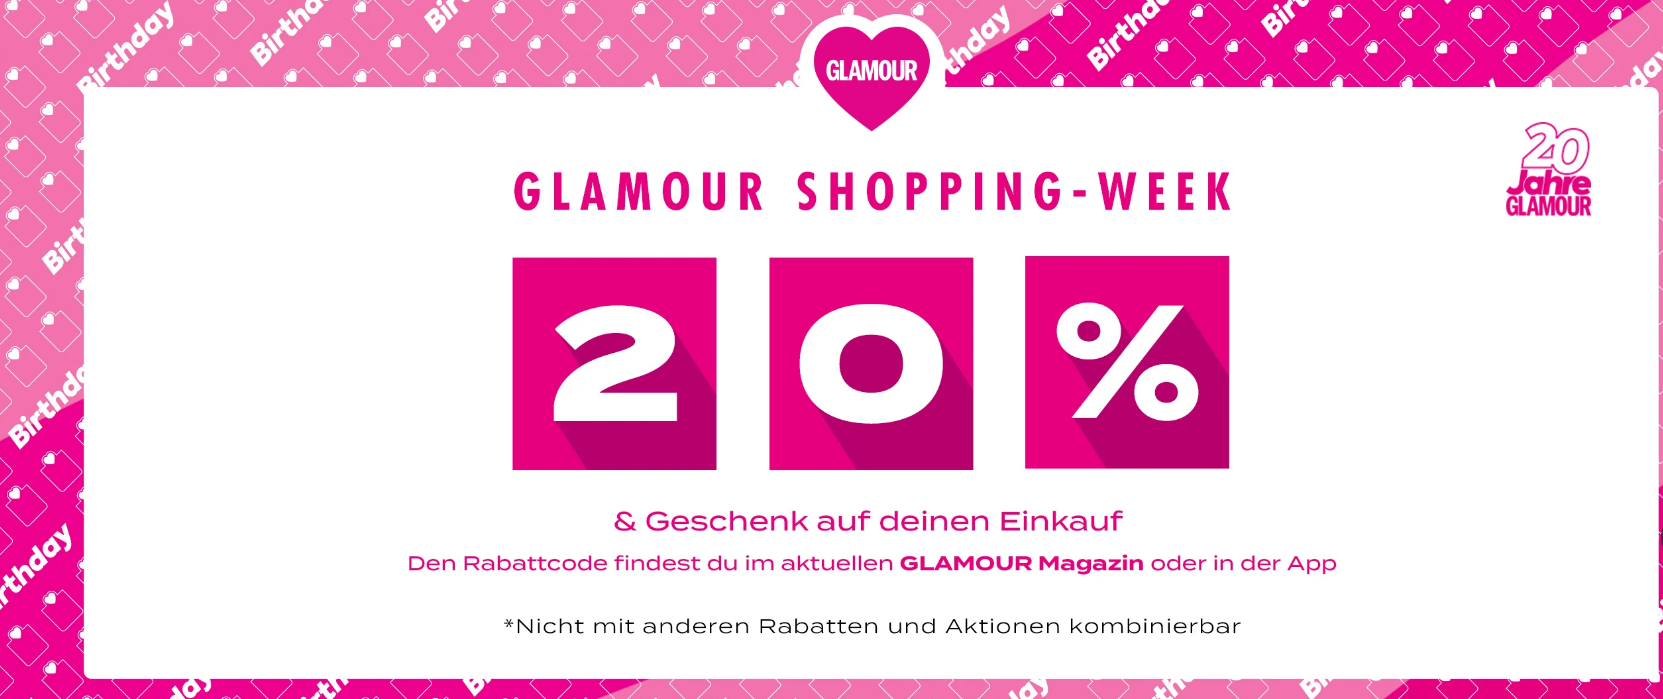 Shein Glamour Shopping-Week